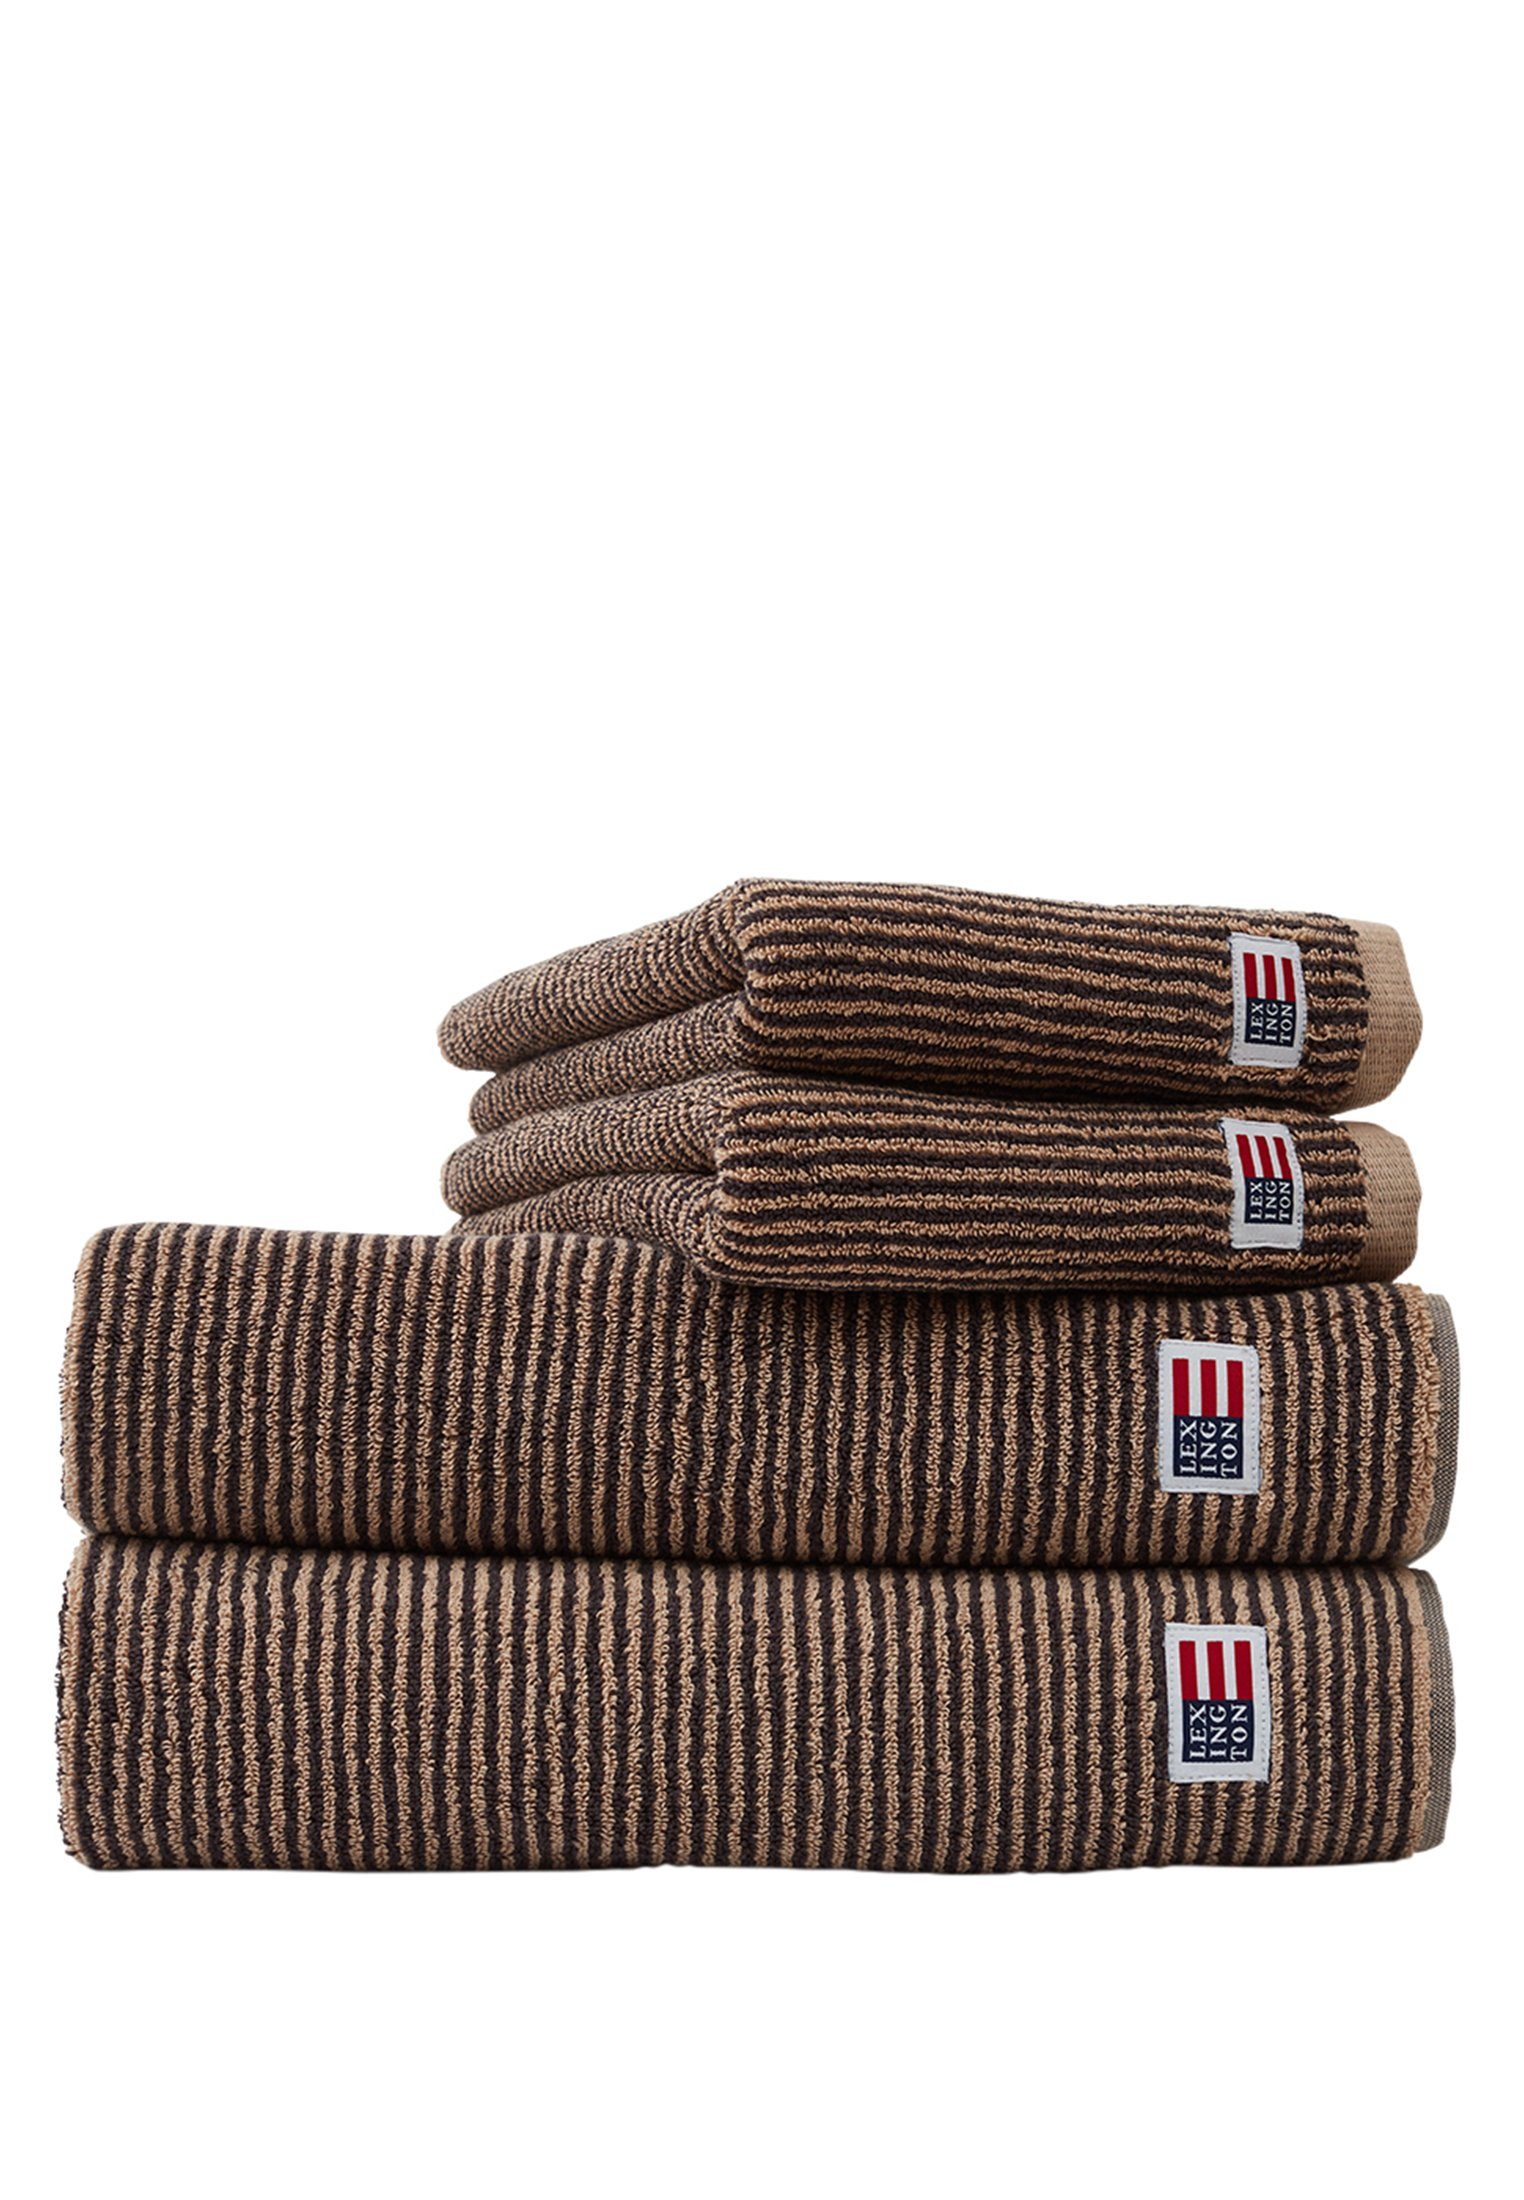 Towel Lexington Original tan/dark gray Handtuch